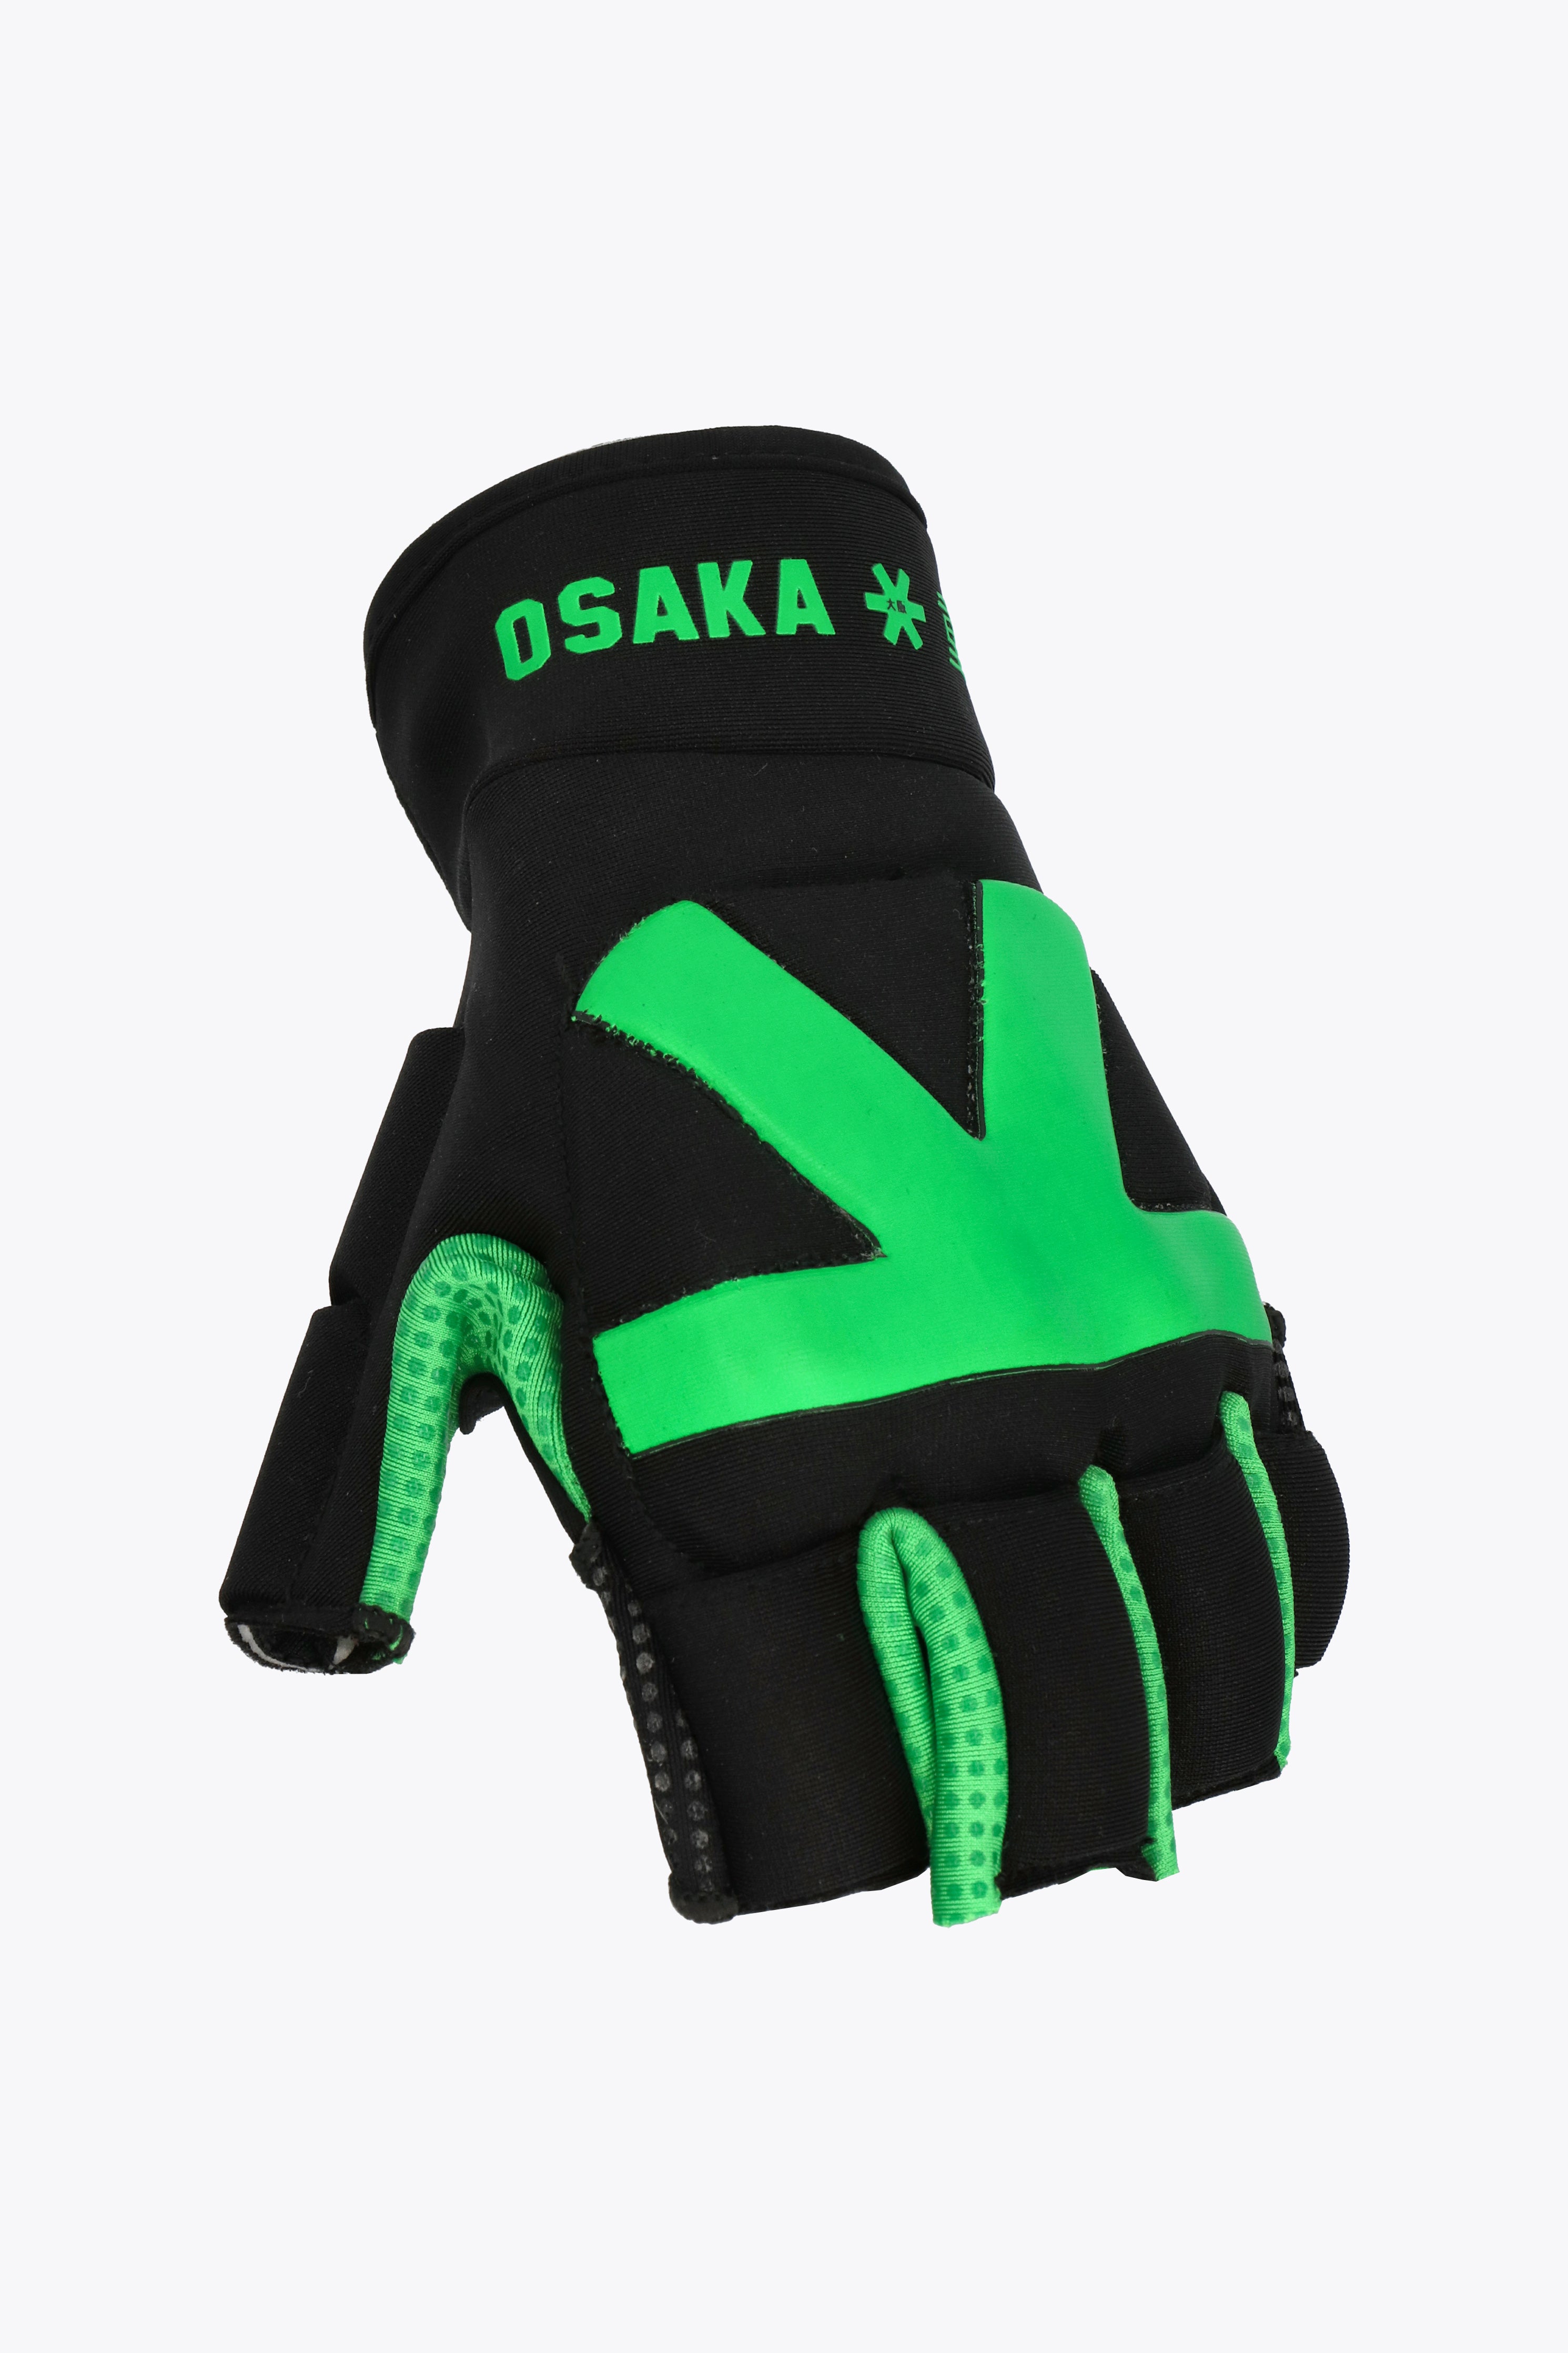 boksen Latijns Ik zie je morgen Osaka Hockeyhandschoenen｜Osakaworld.com | Osaka World